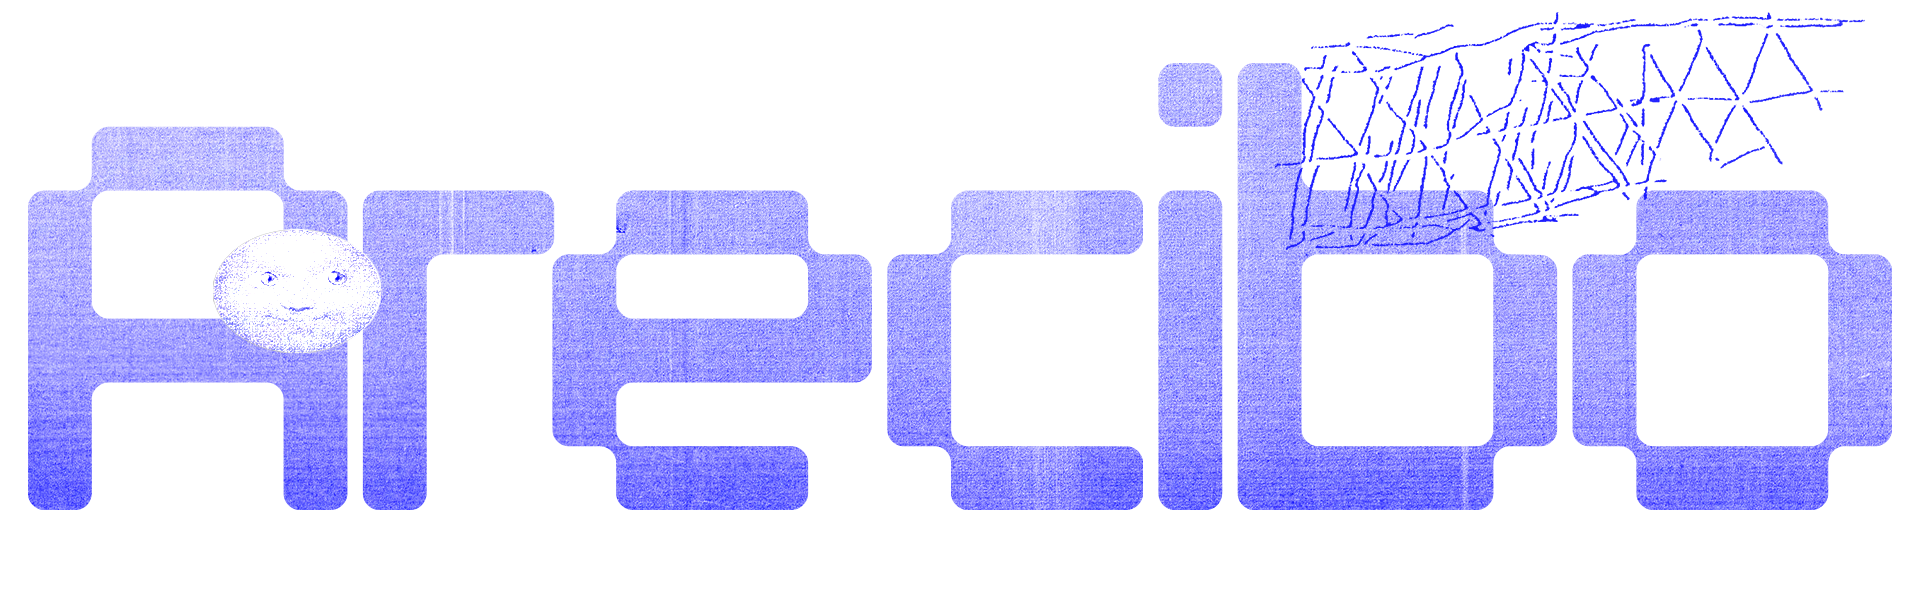 Header image and logo for Arecibo brand design studio